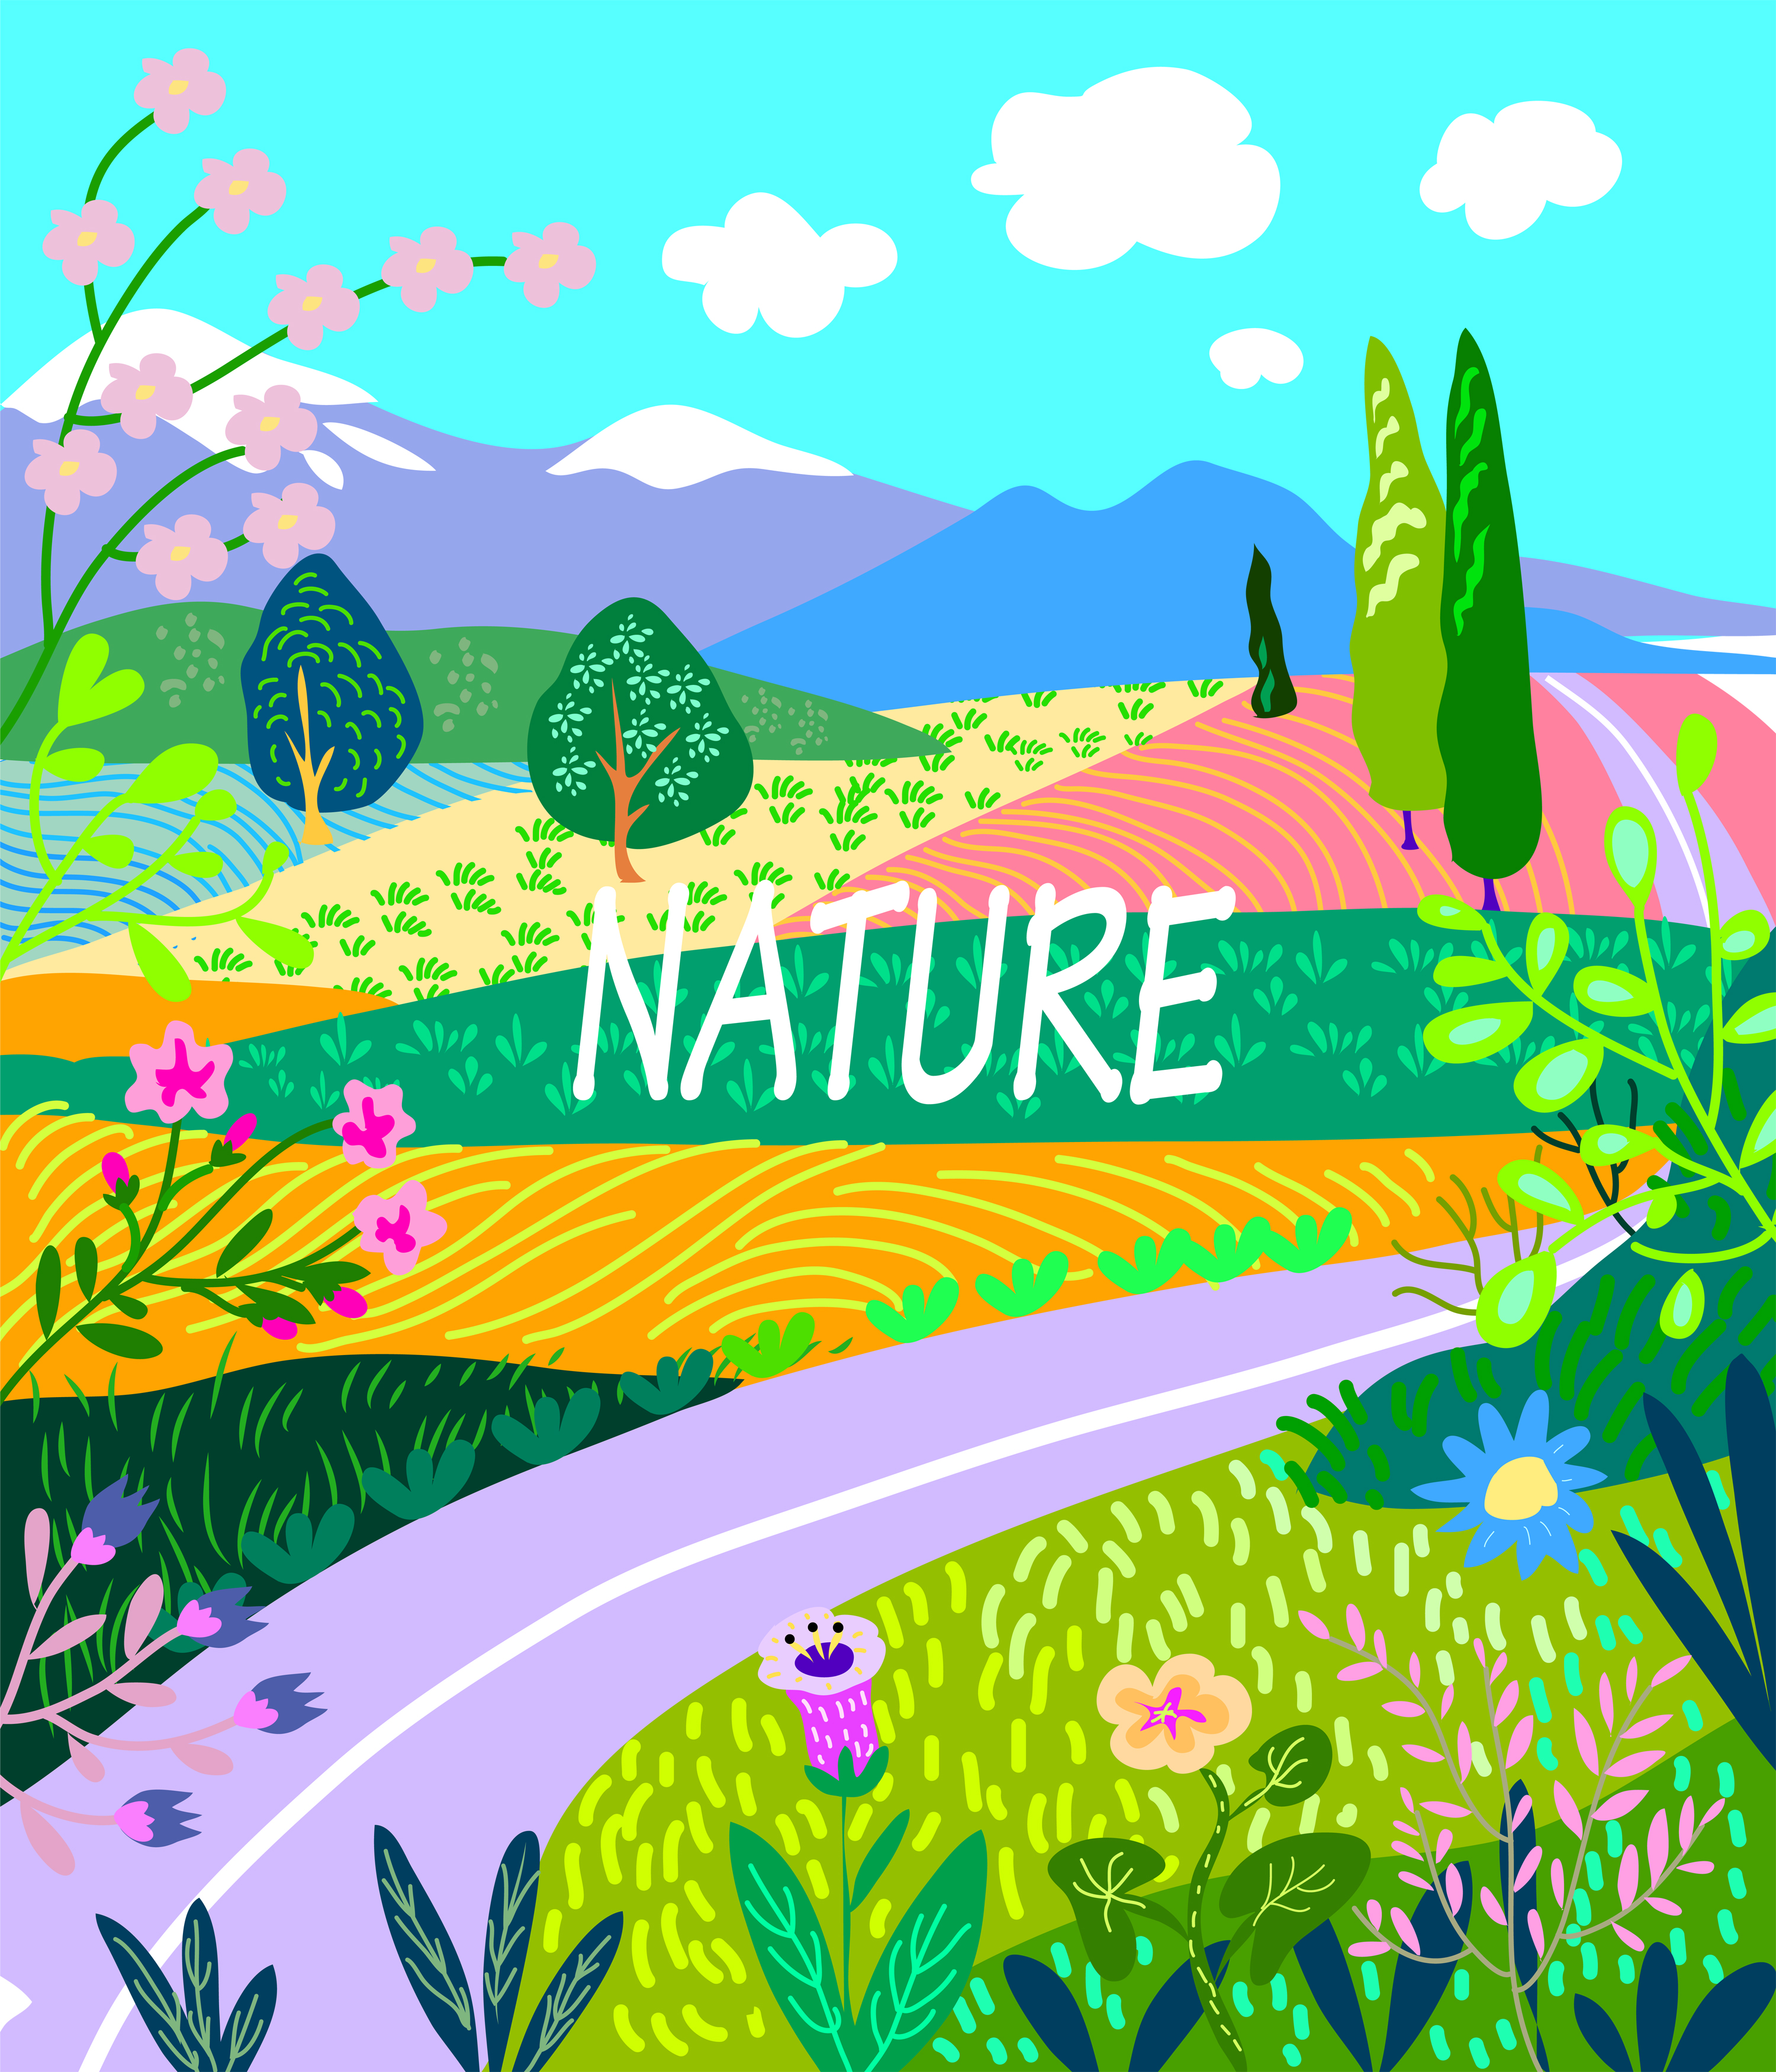 Nature11